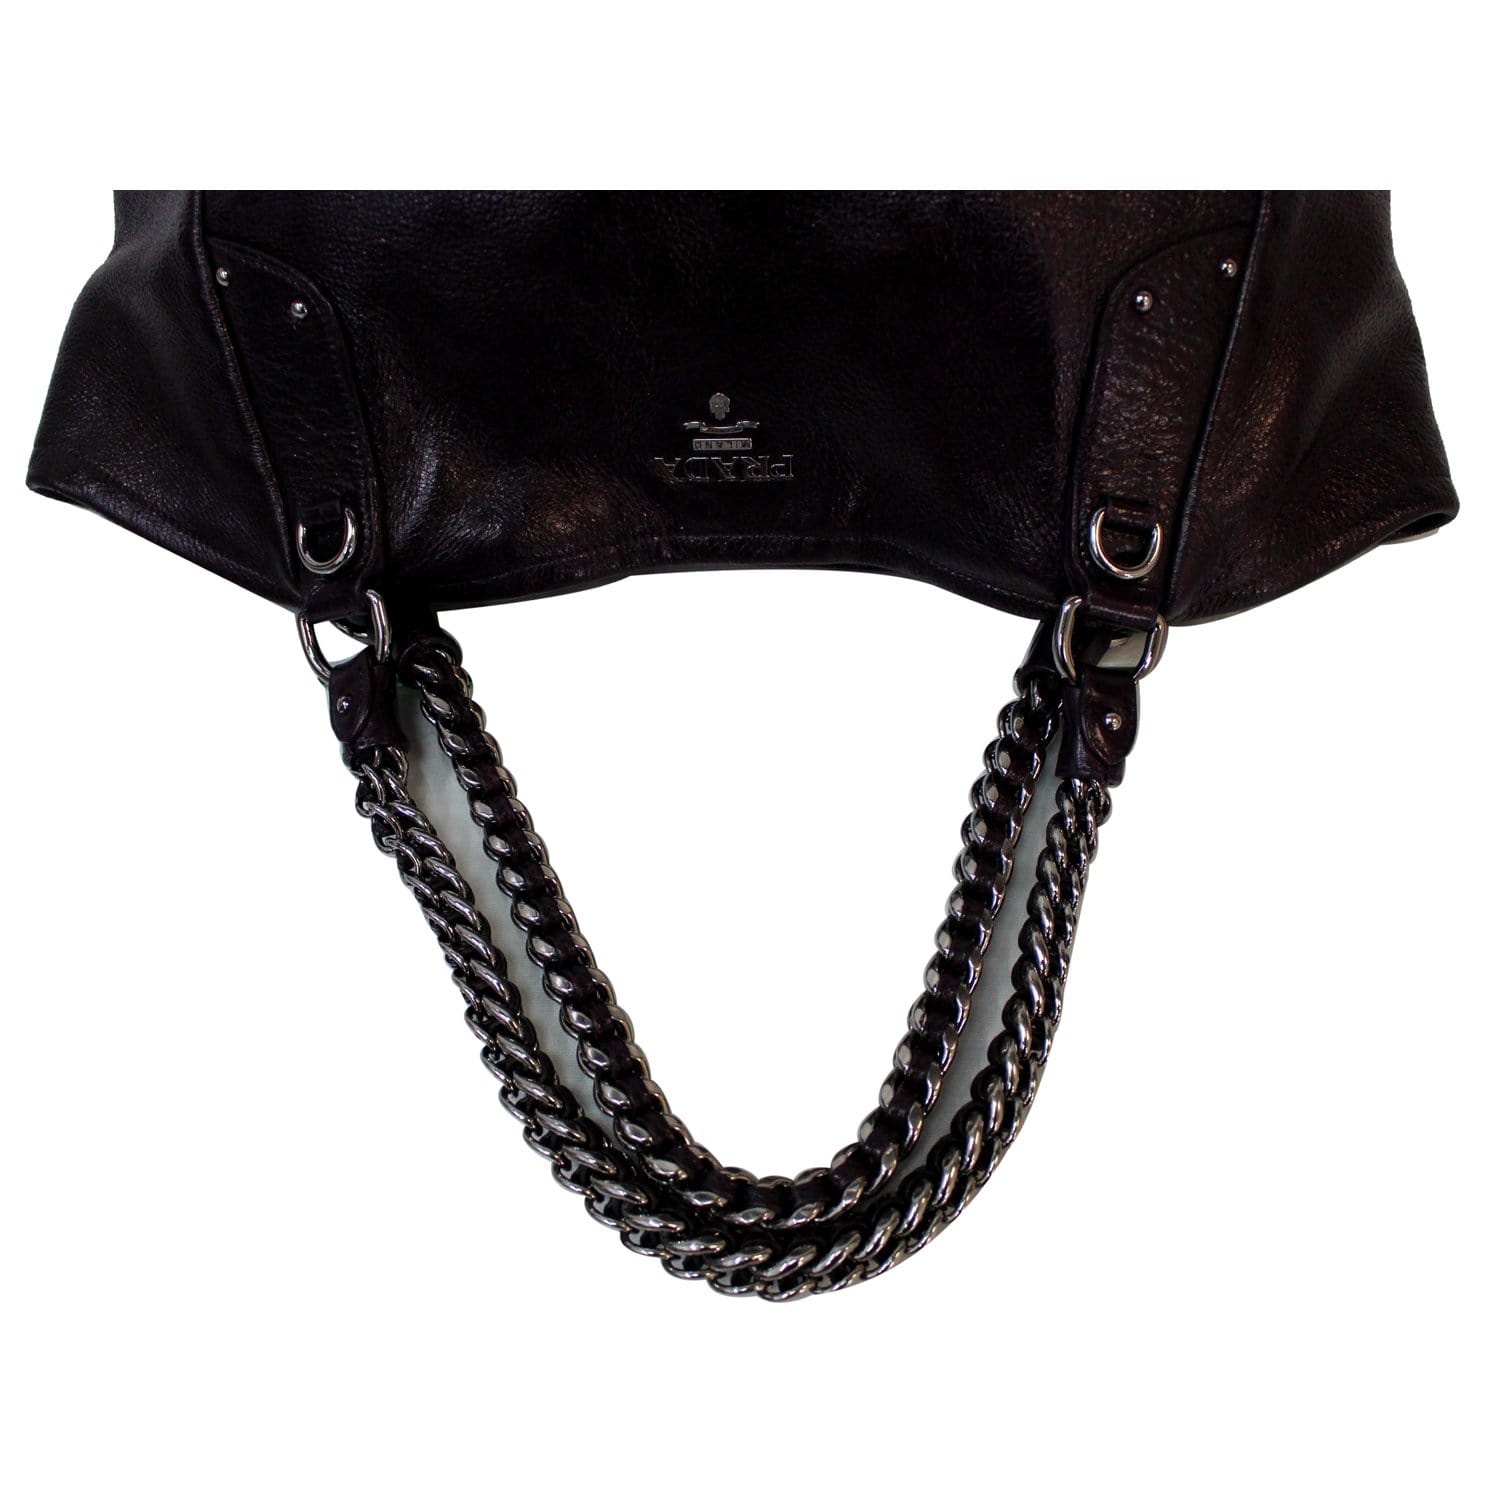 Prada Chain Strap Shoulder Bags